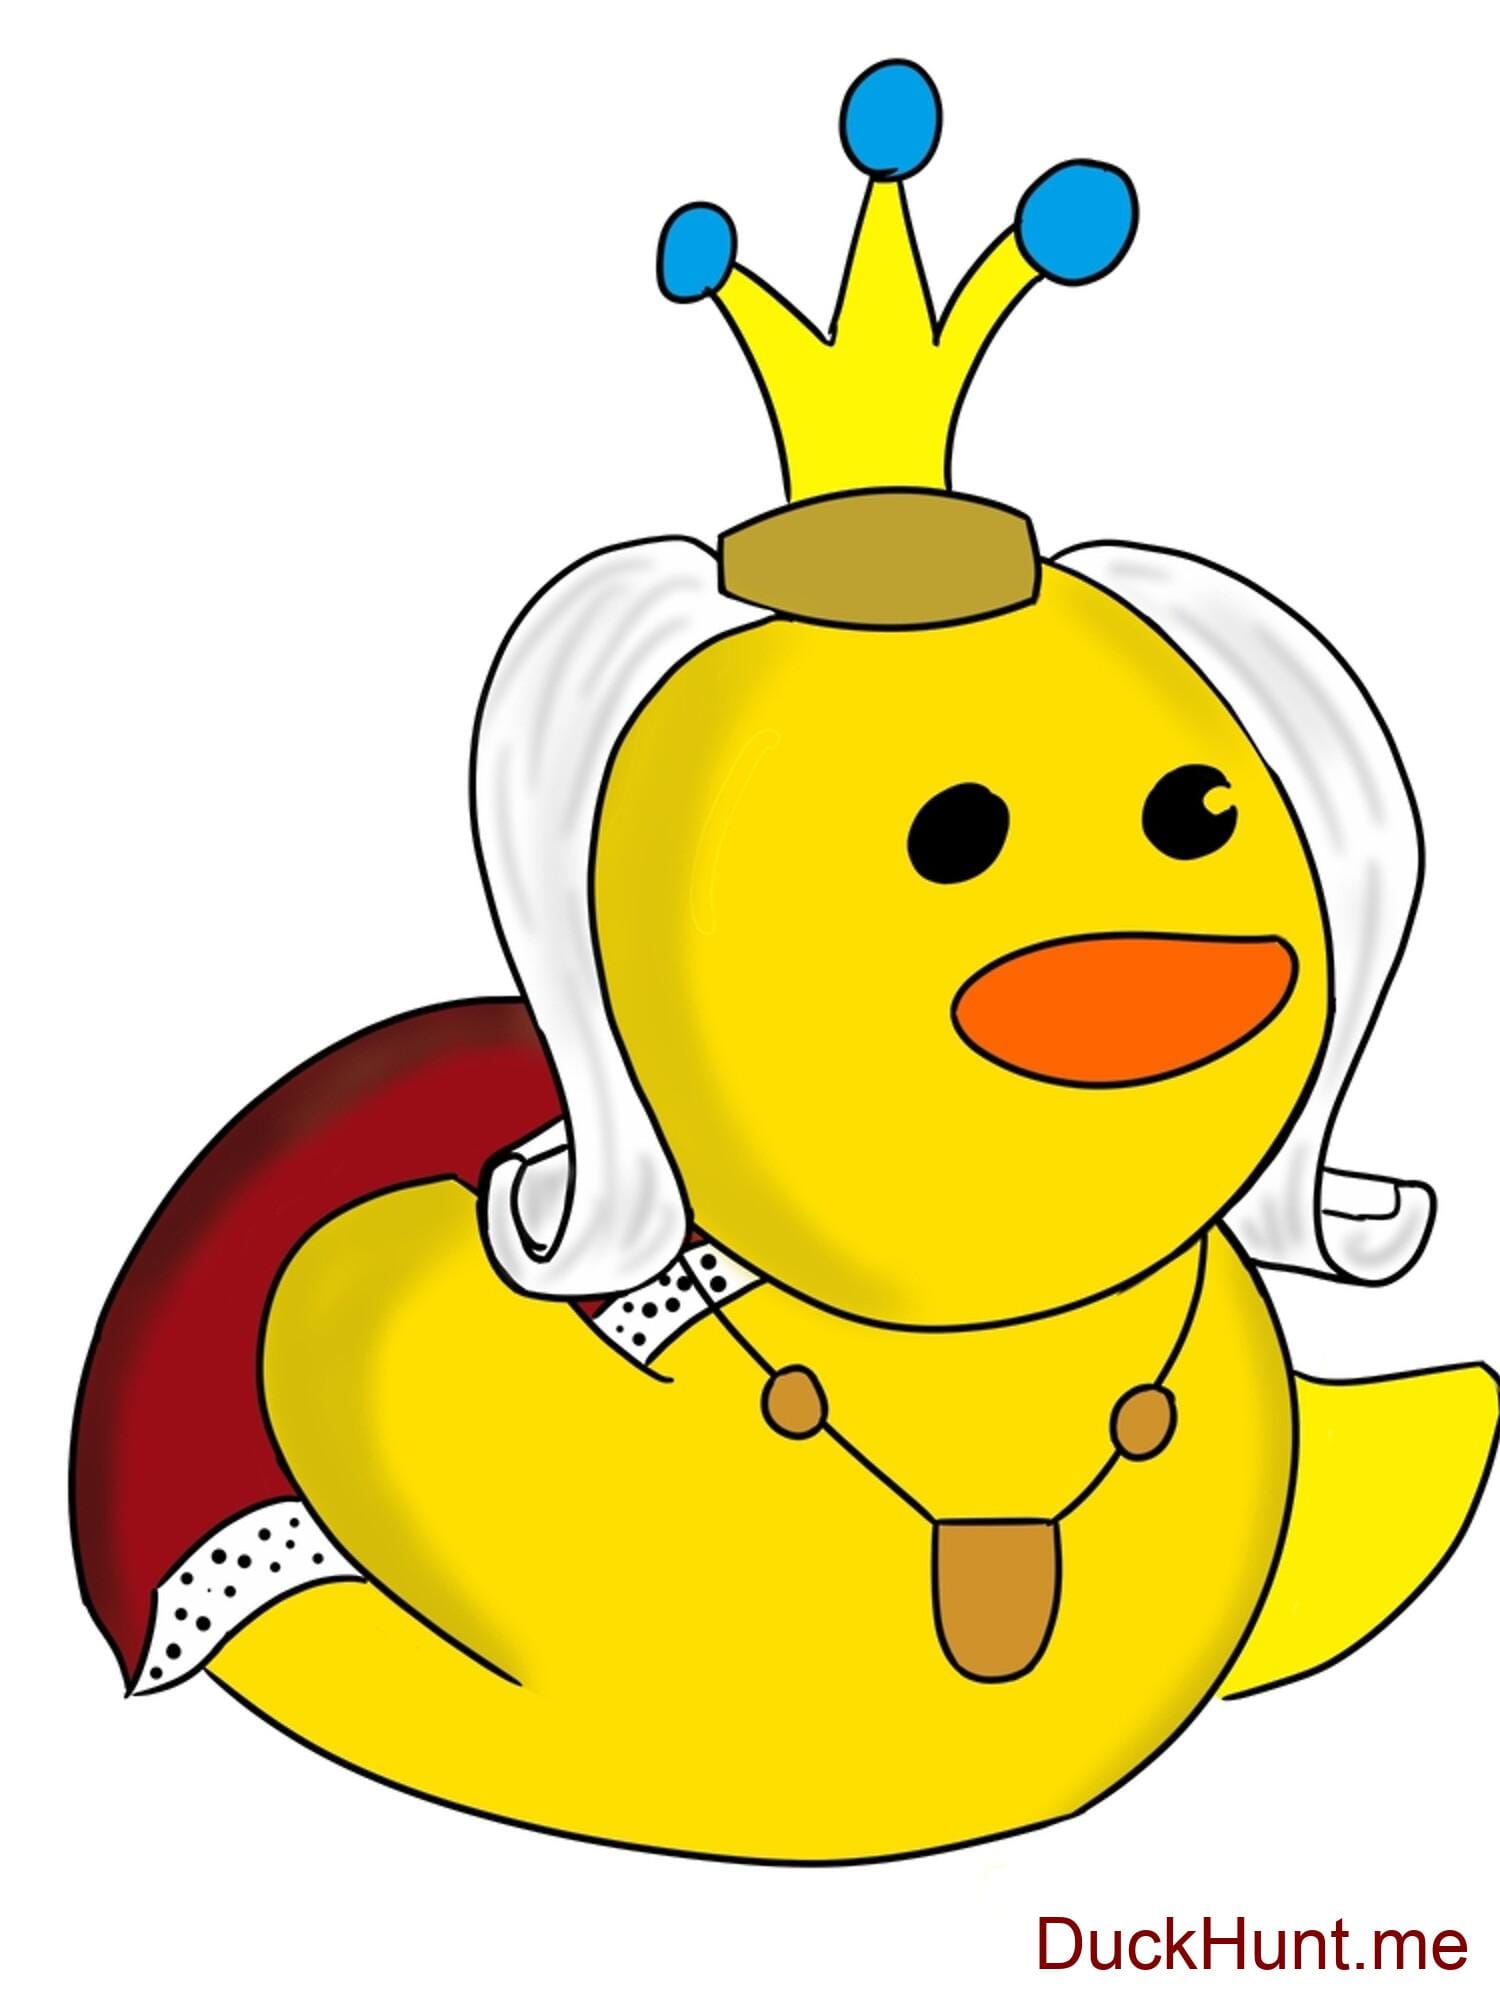 Royal Duck Scarf alternative image 2